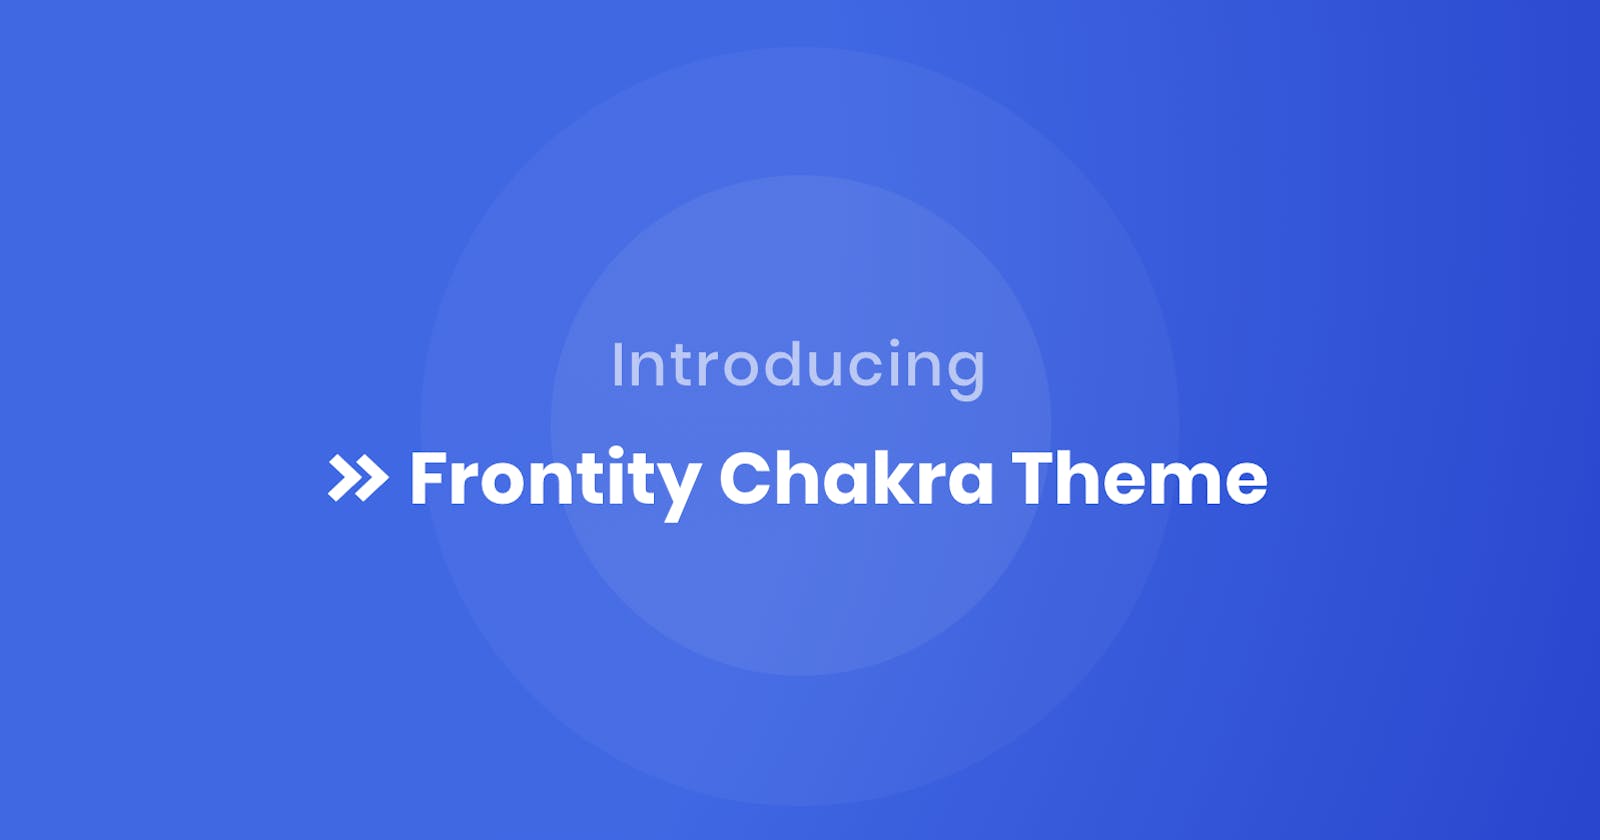 Introducing Frontity Chakra Theme